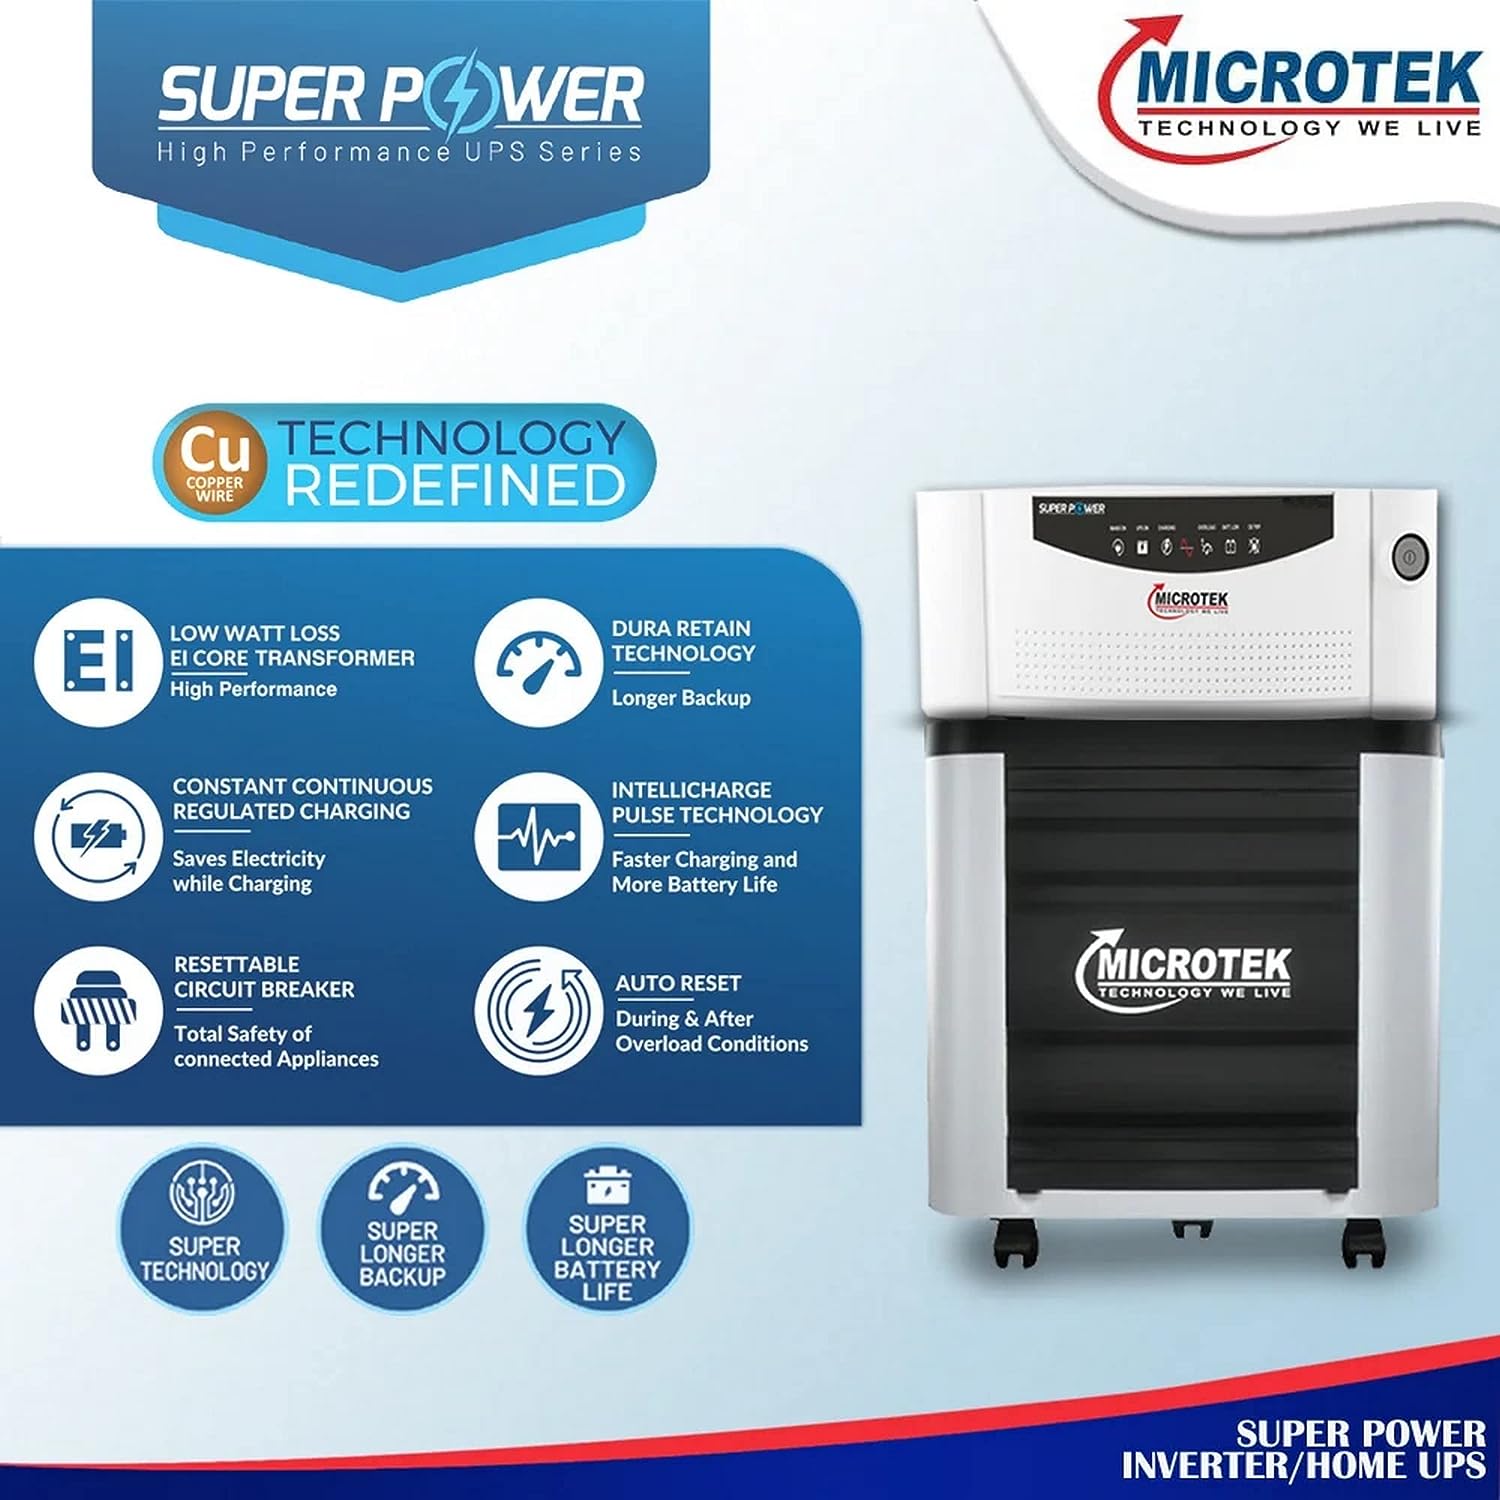 Microtek Super Power 700 Advanced Digital 600VA/12V Inverter, Support 1 Battery With 2 Year Warranty for Home, Office & Shops